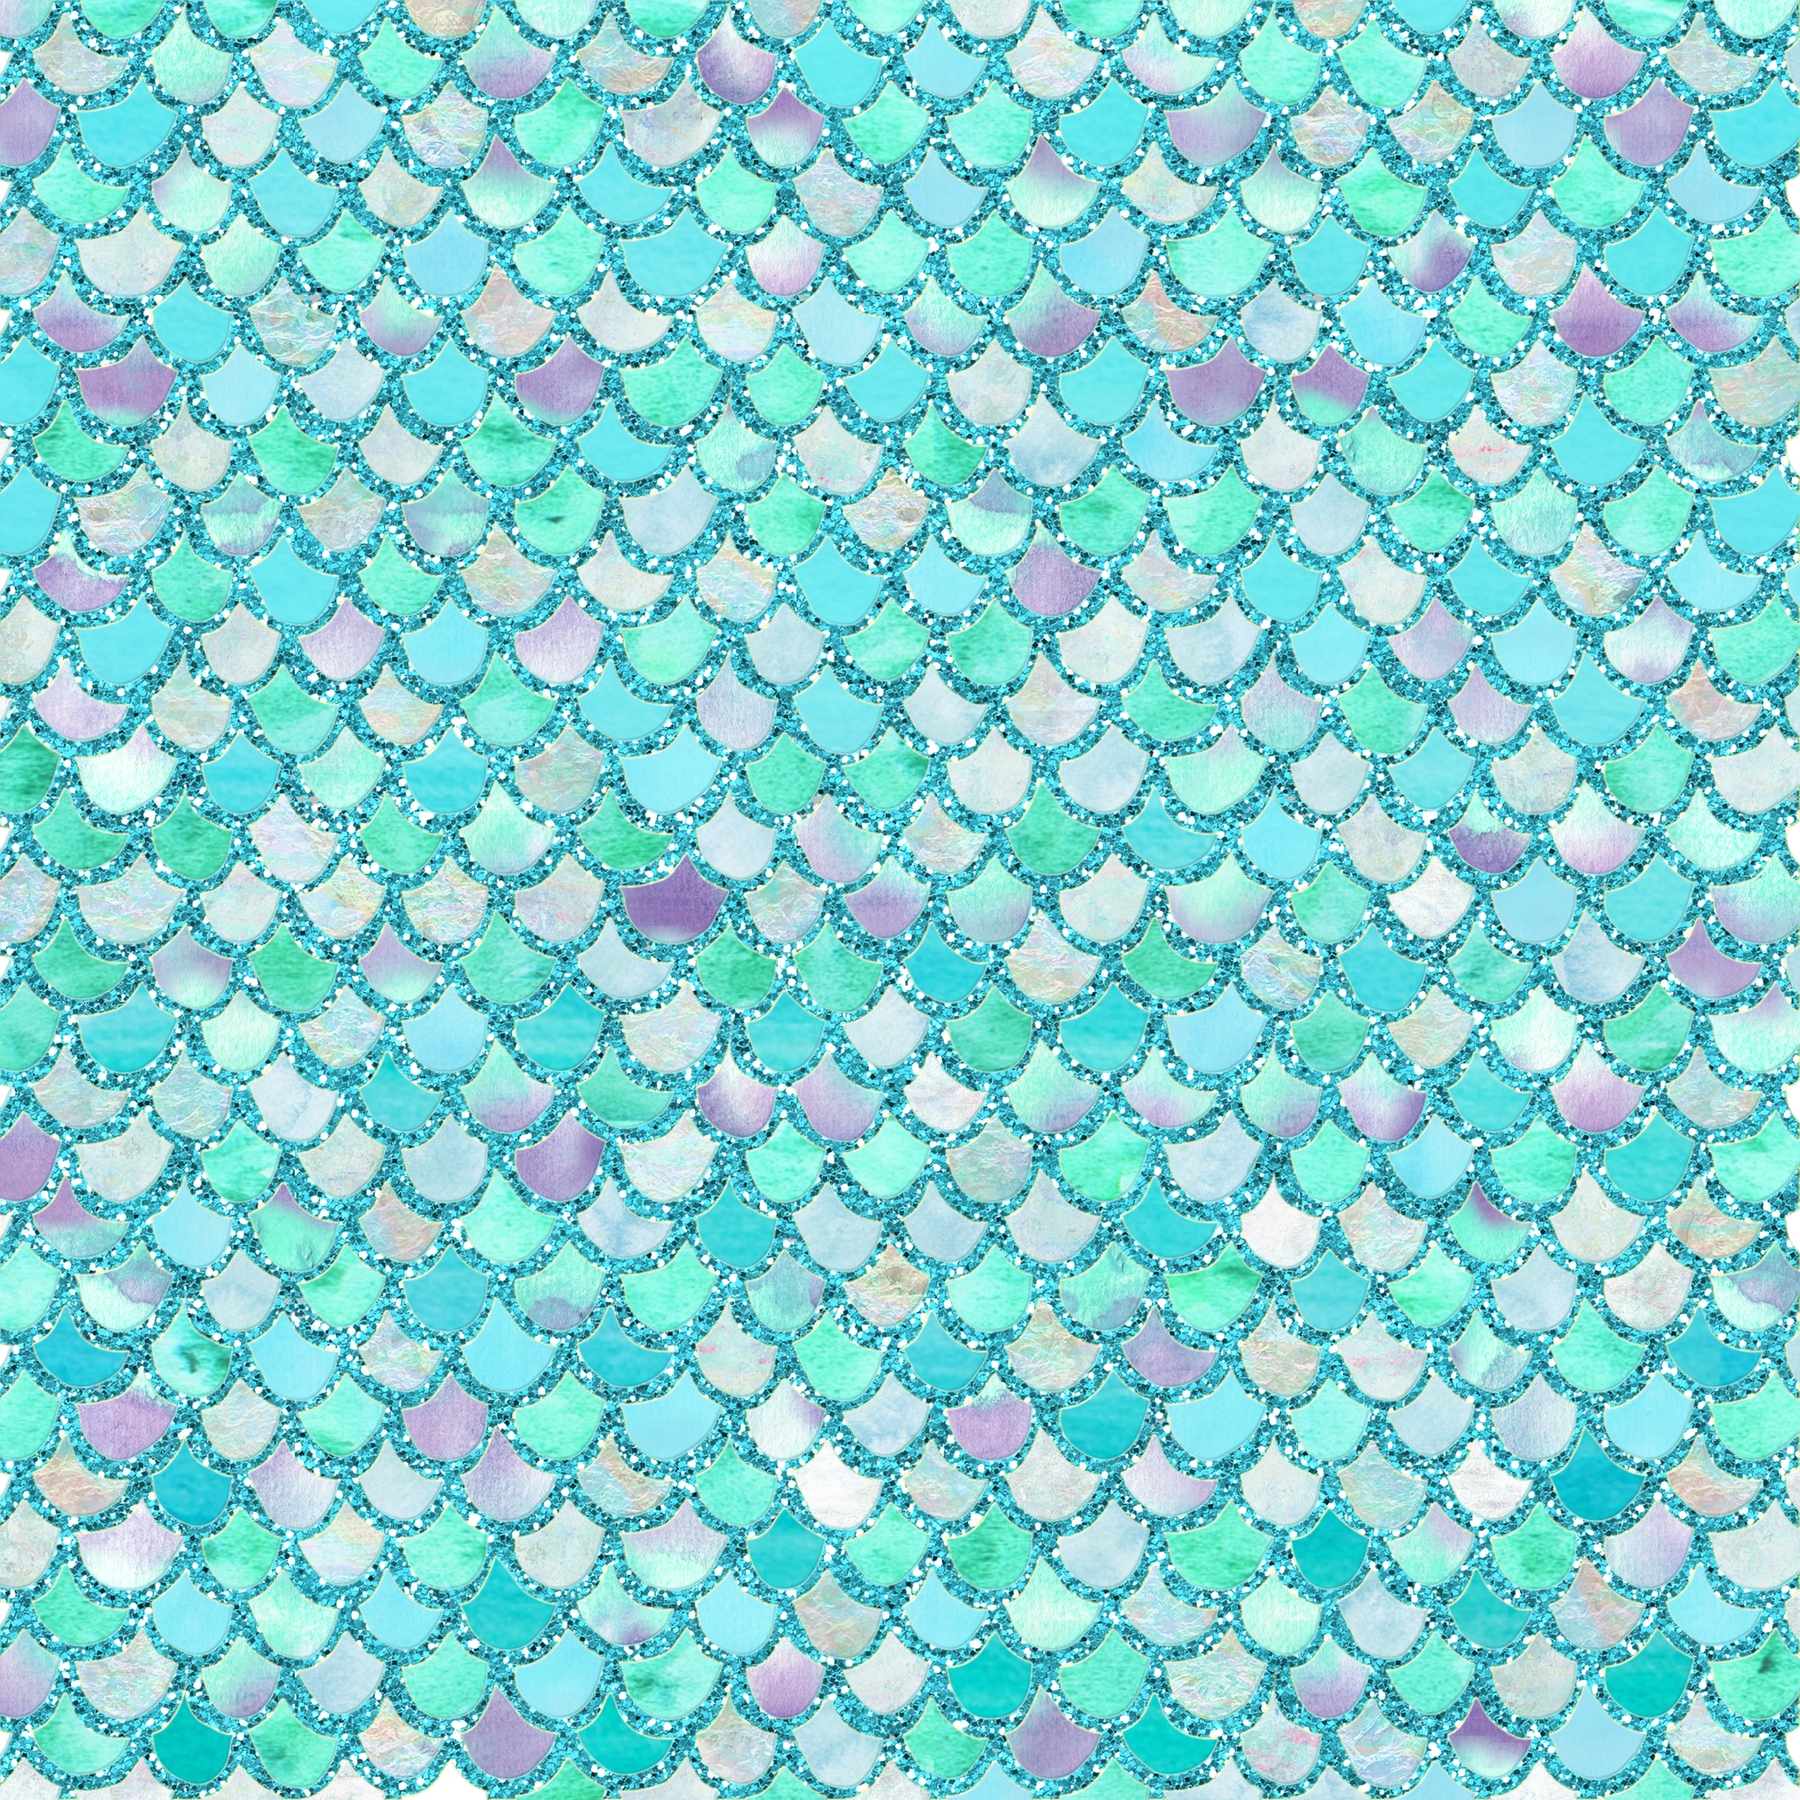 Teal Glitter Mermaid Scales Wallpaper - Buy Online at Happywall